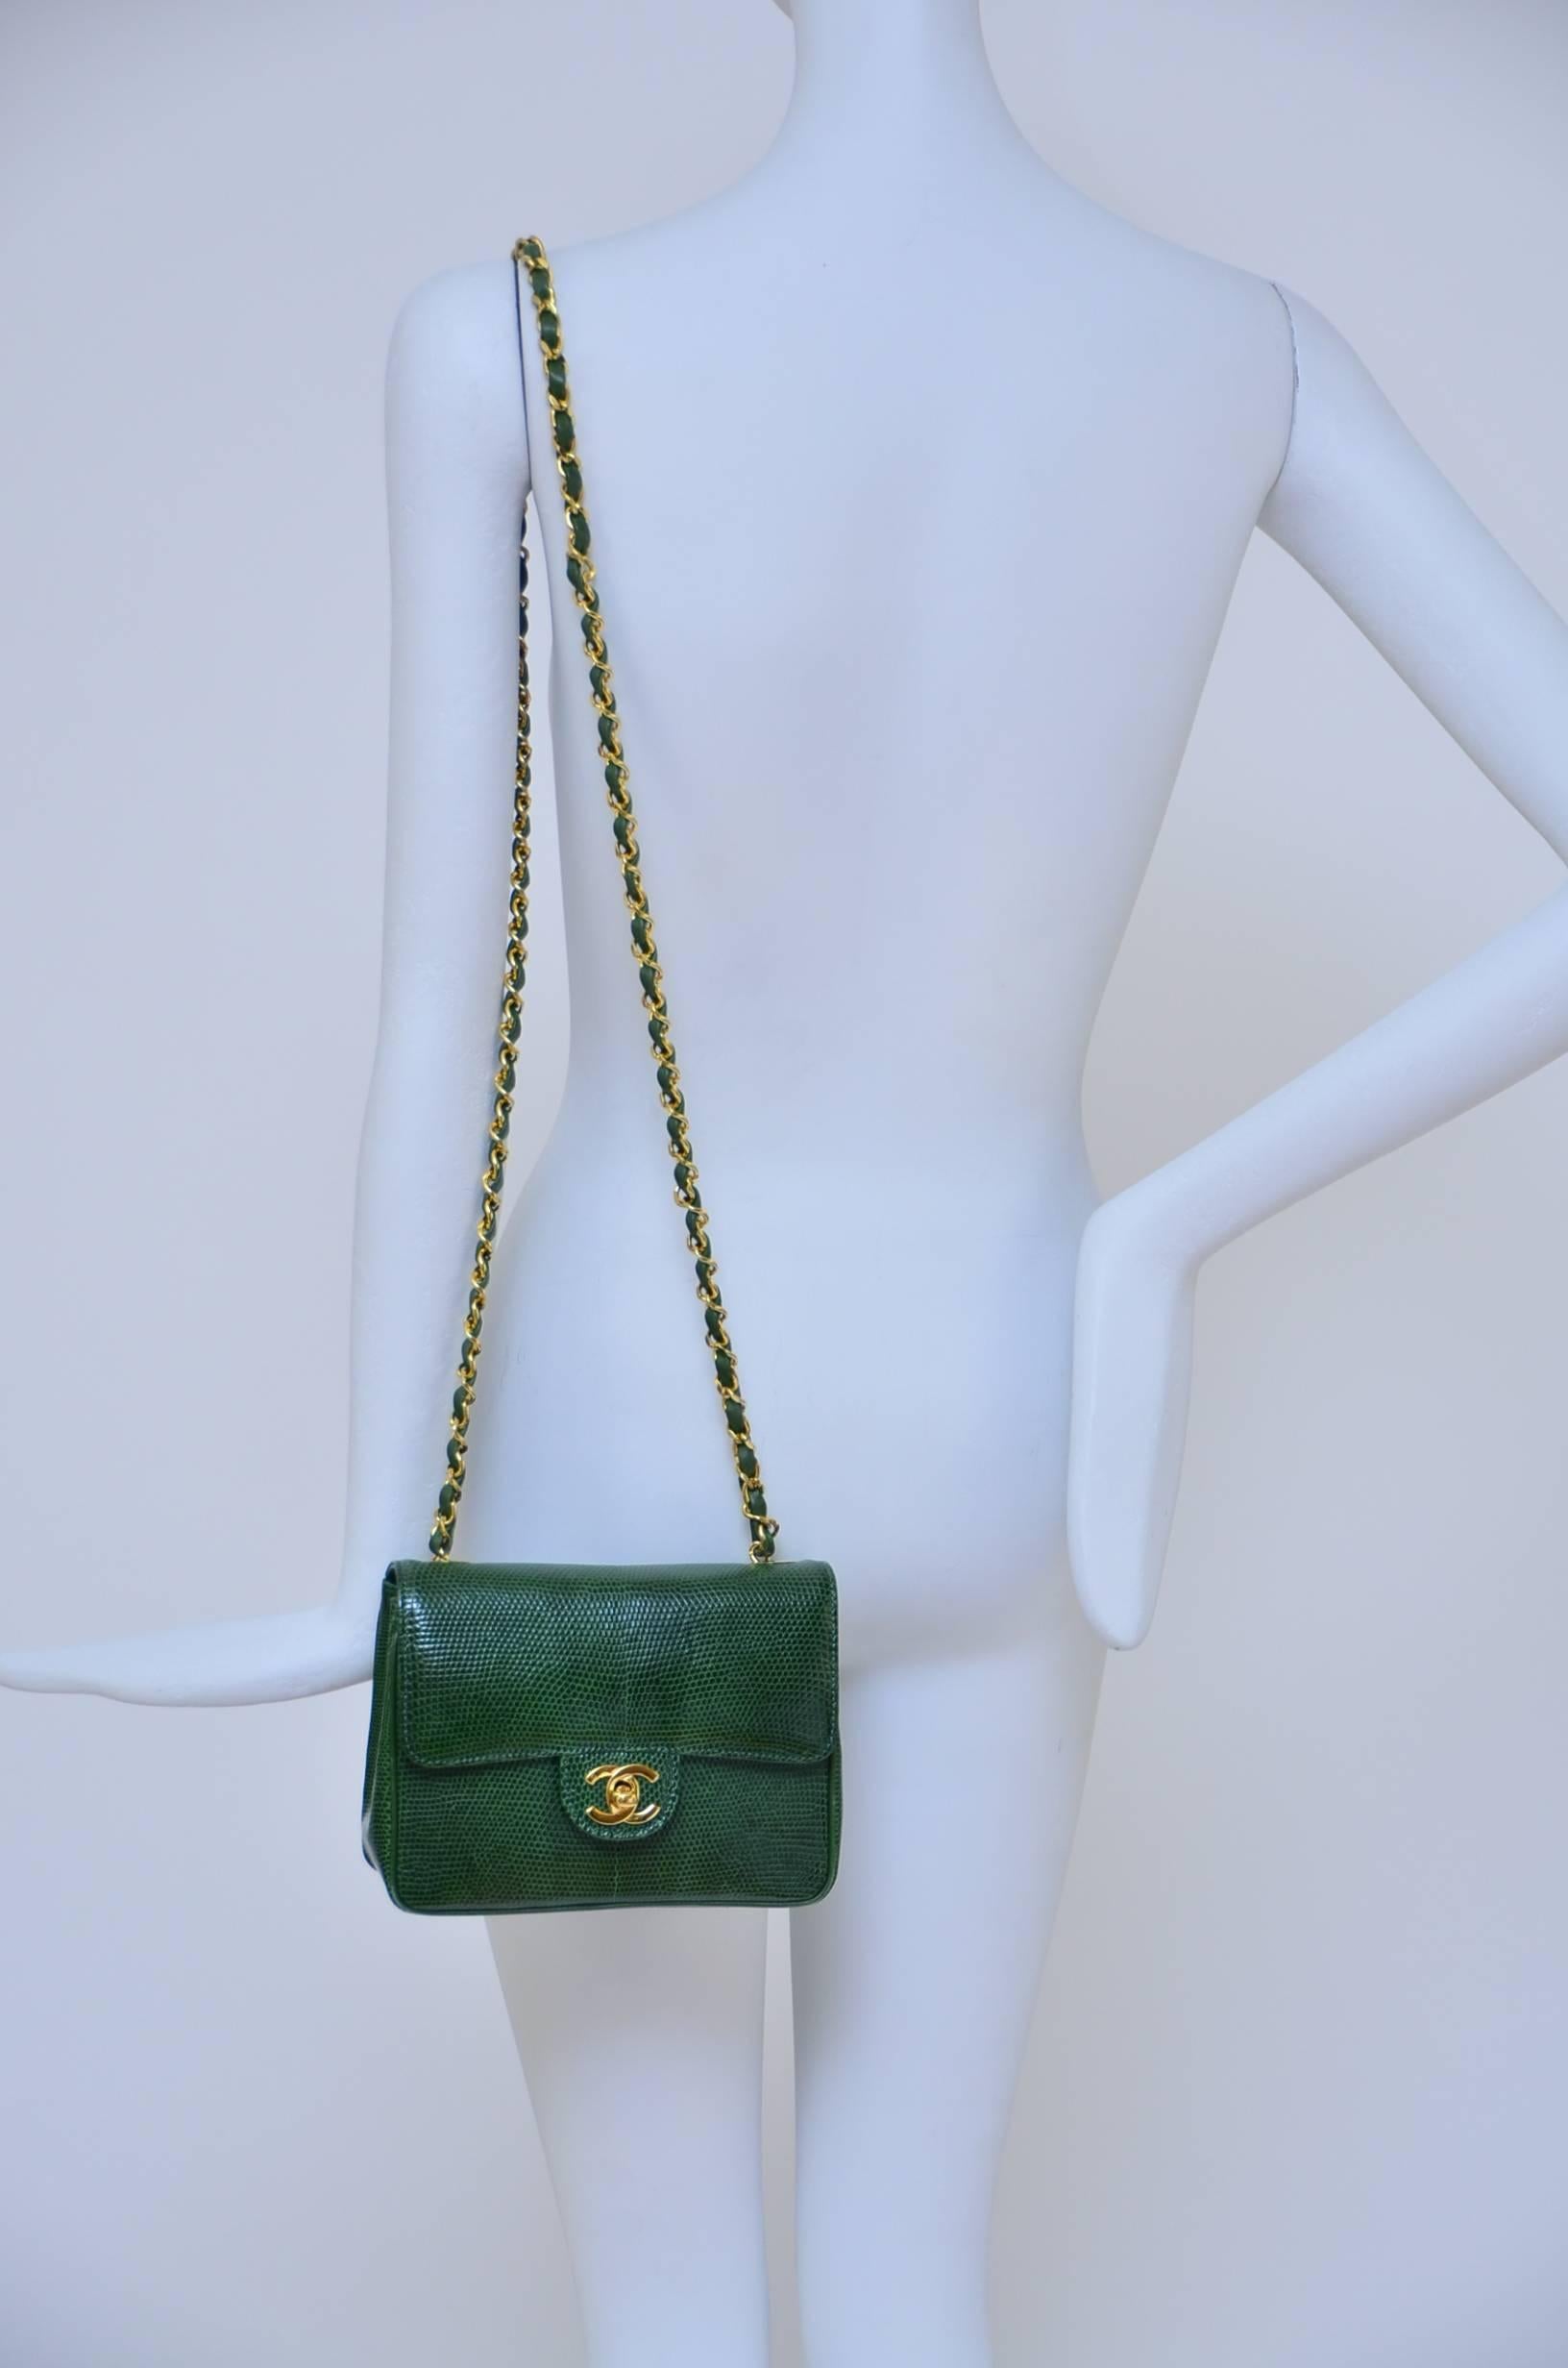 CHANEL Rare Vintage  Emerald Green Lizard Mini Handbag  Excellent 2